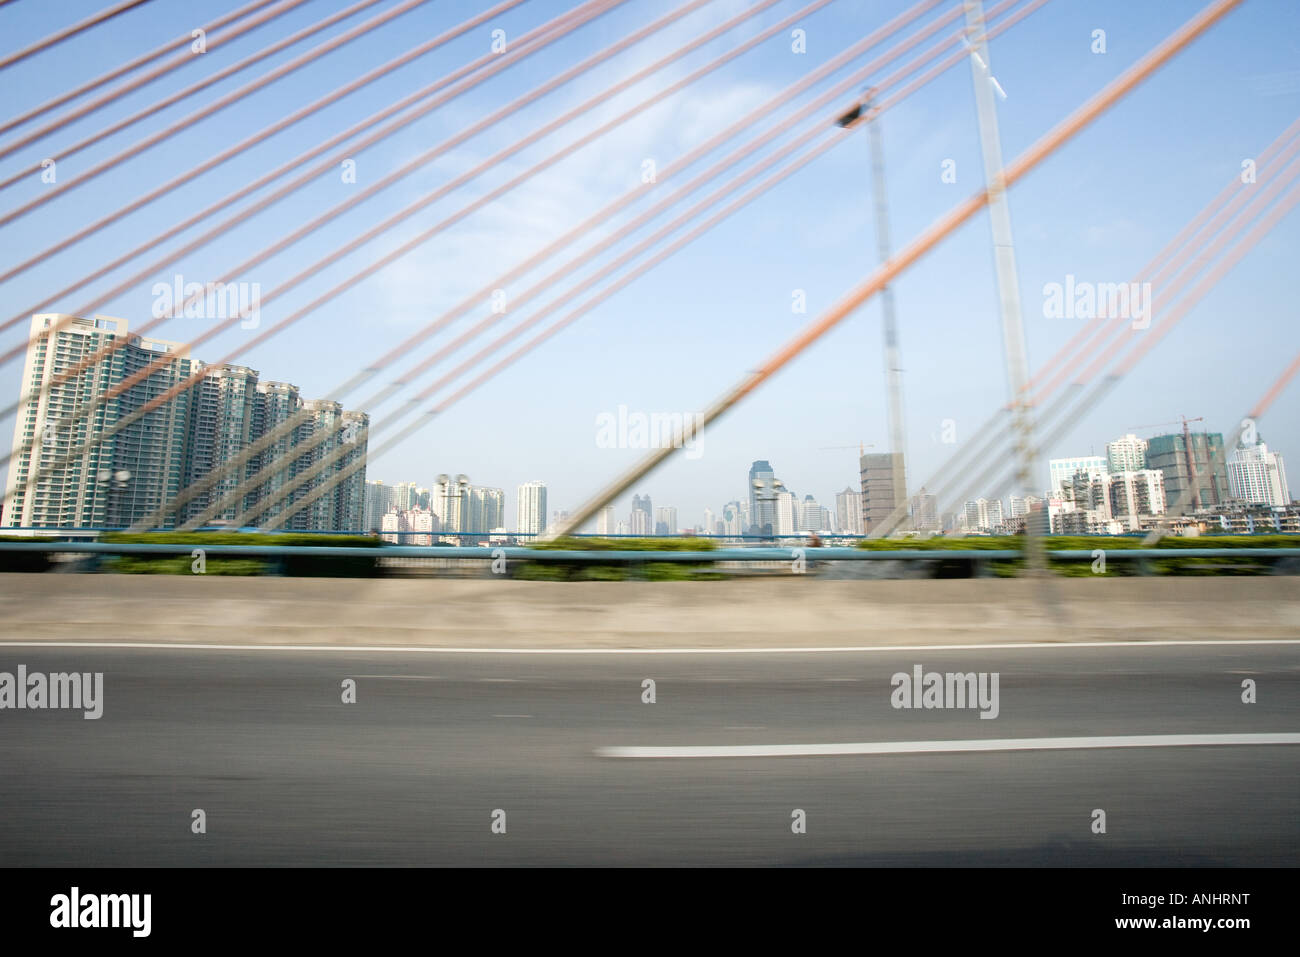 Suspension bridge, cropped view, cityscape in background Stock Photo